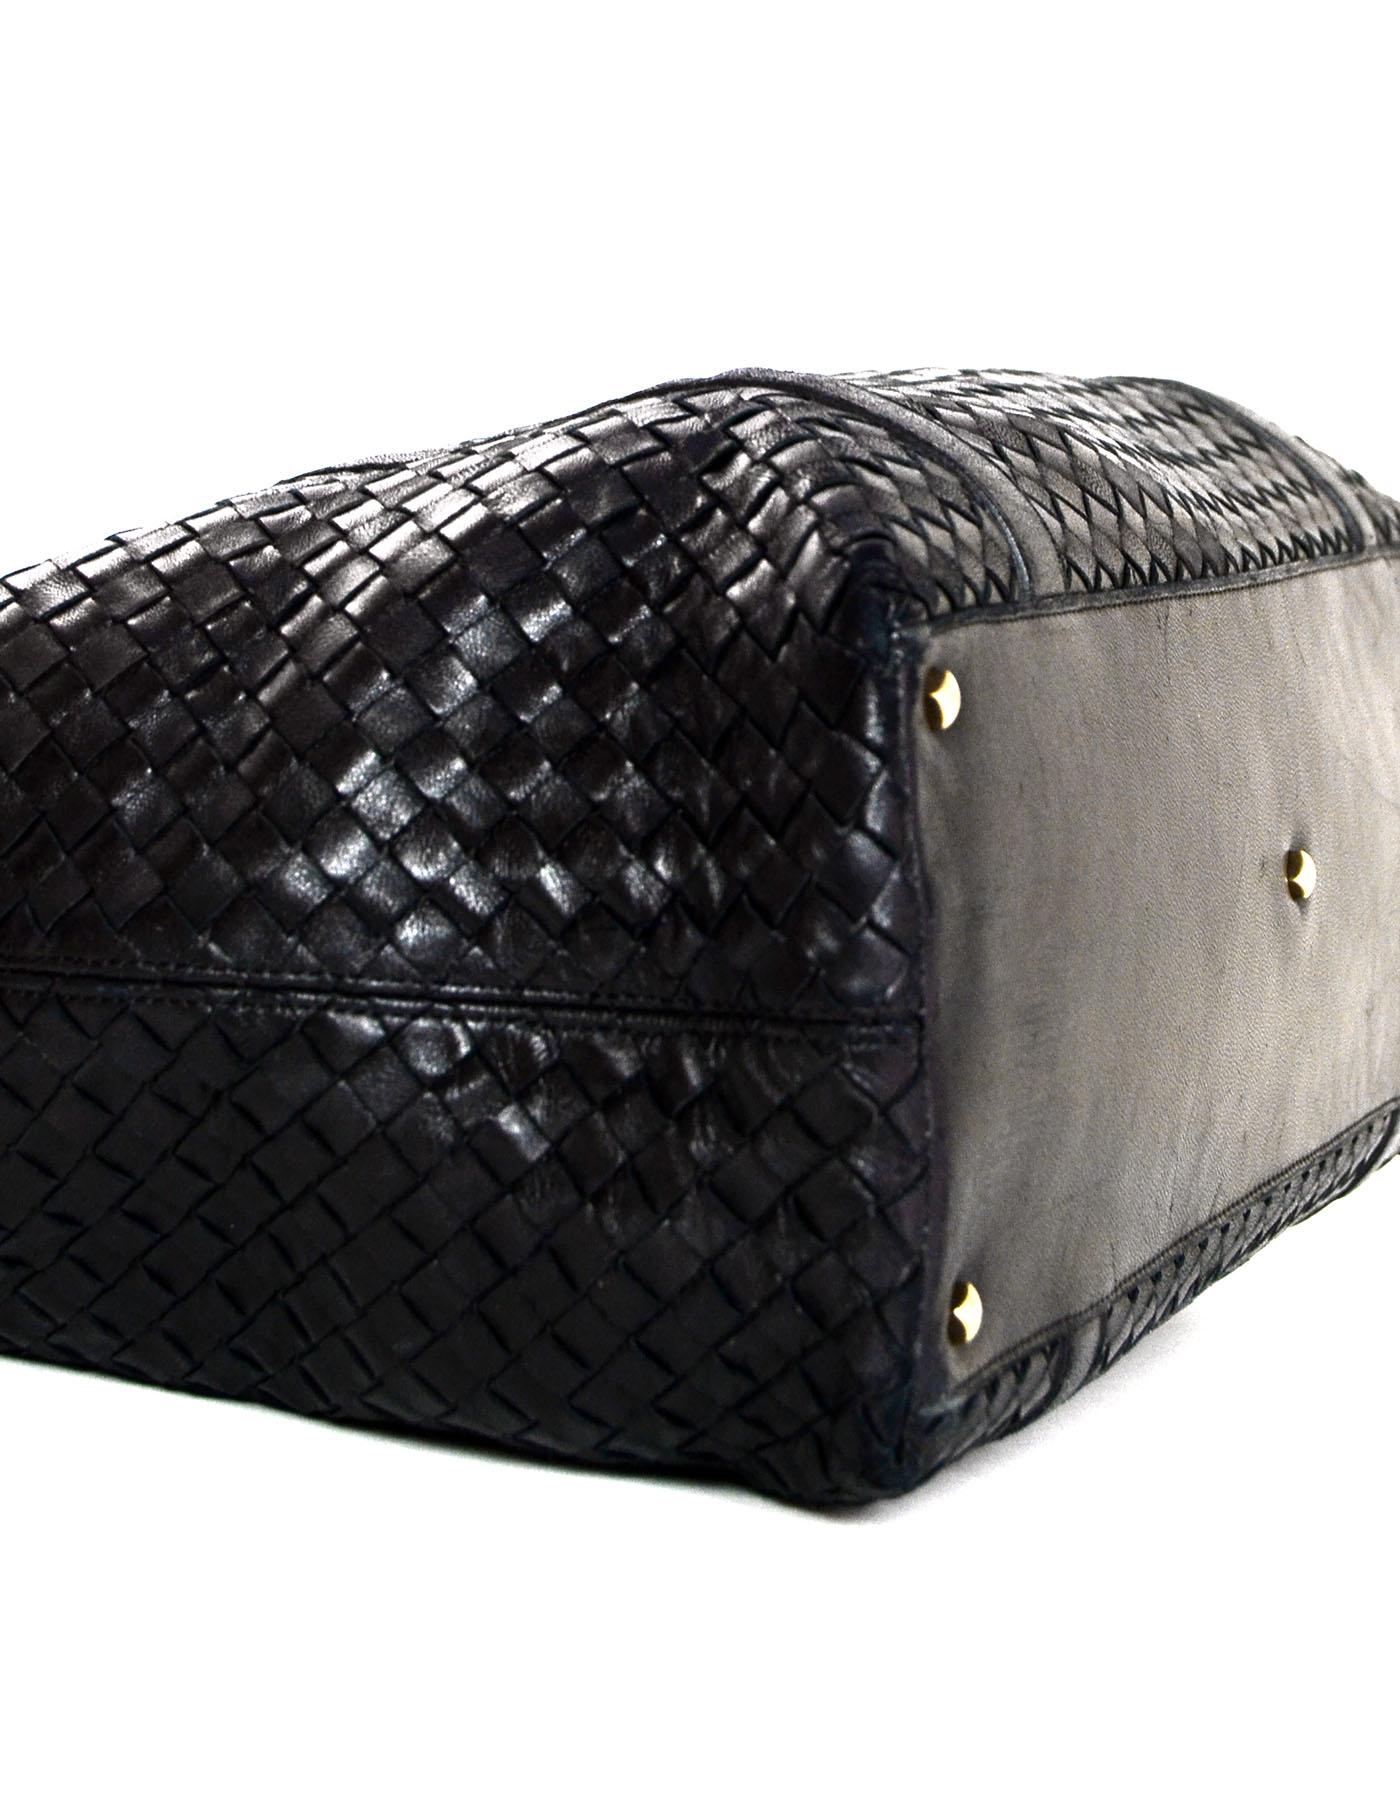  Bottega Veneta Black Woven Leather Intrecciato Tote Bag In Good Condition In New York, NY